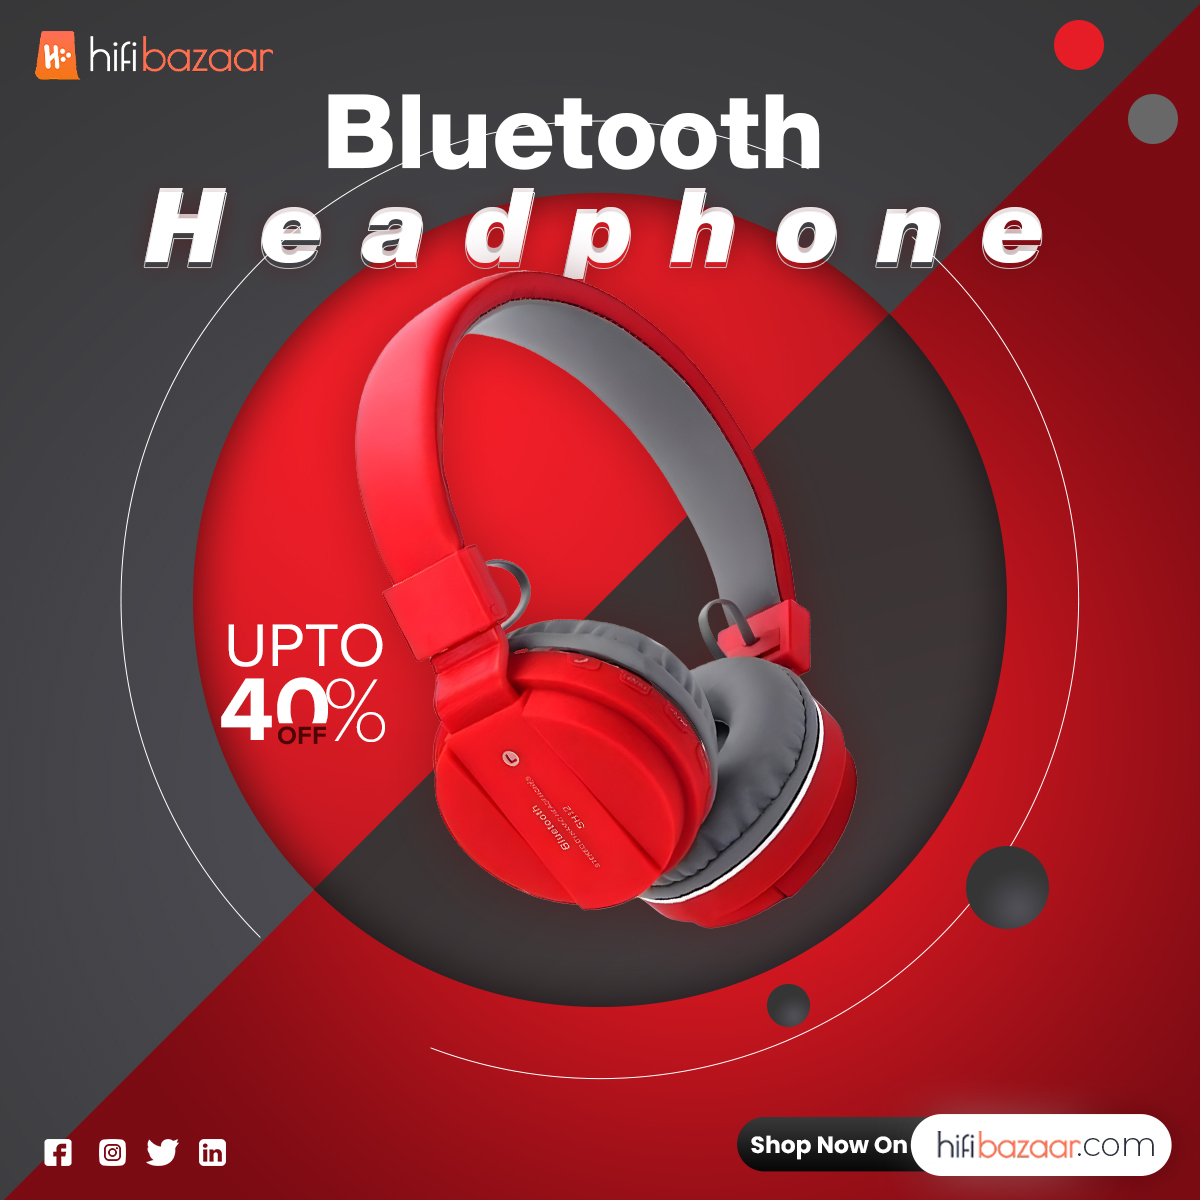 🎶 Elevate Your Sound Experience with our Bluetooth Headphones! 🎧✨
Buy Now:🛒✅ shorturl.at/yBKO4
.
.
#BluetoothHeadphones #WirelessAudio #SuperiorSoundQuality #ComfortableListening #MusicOnTheGo #ShopNow #UpgradeYourSound #WirelessFreedom #ImmerseYourself #hifibazaar